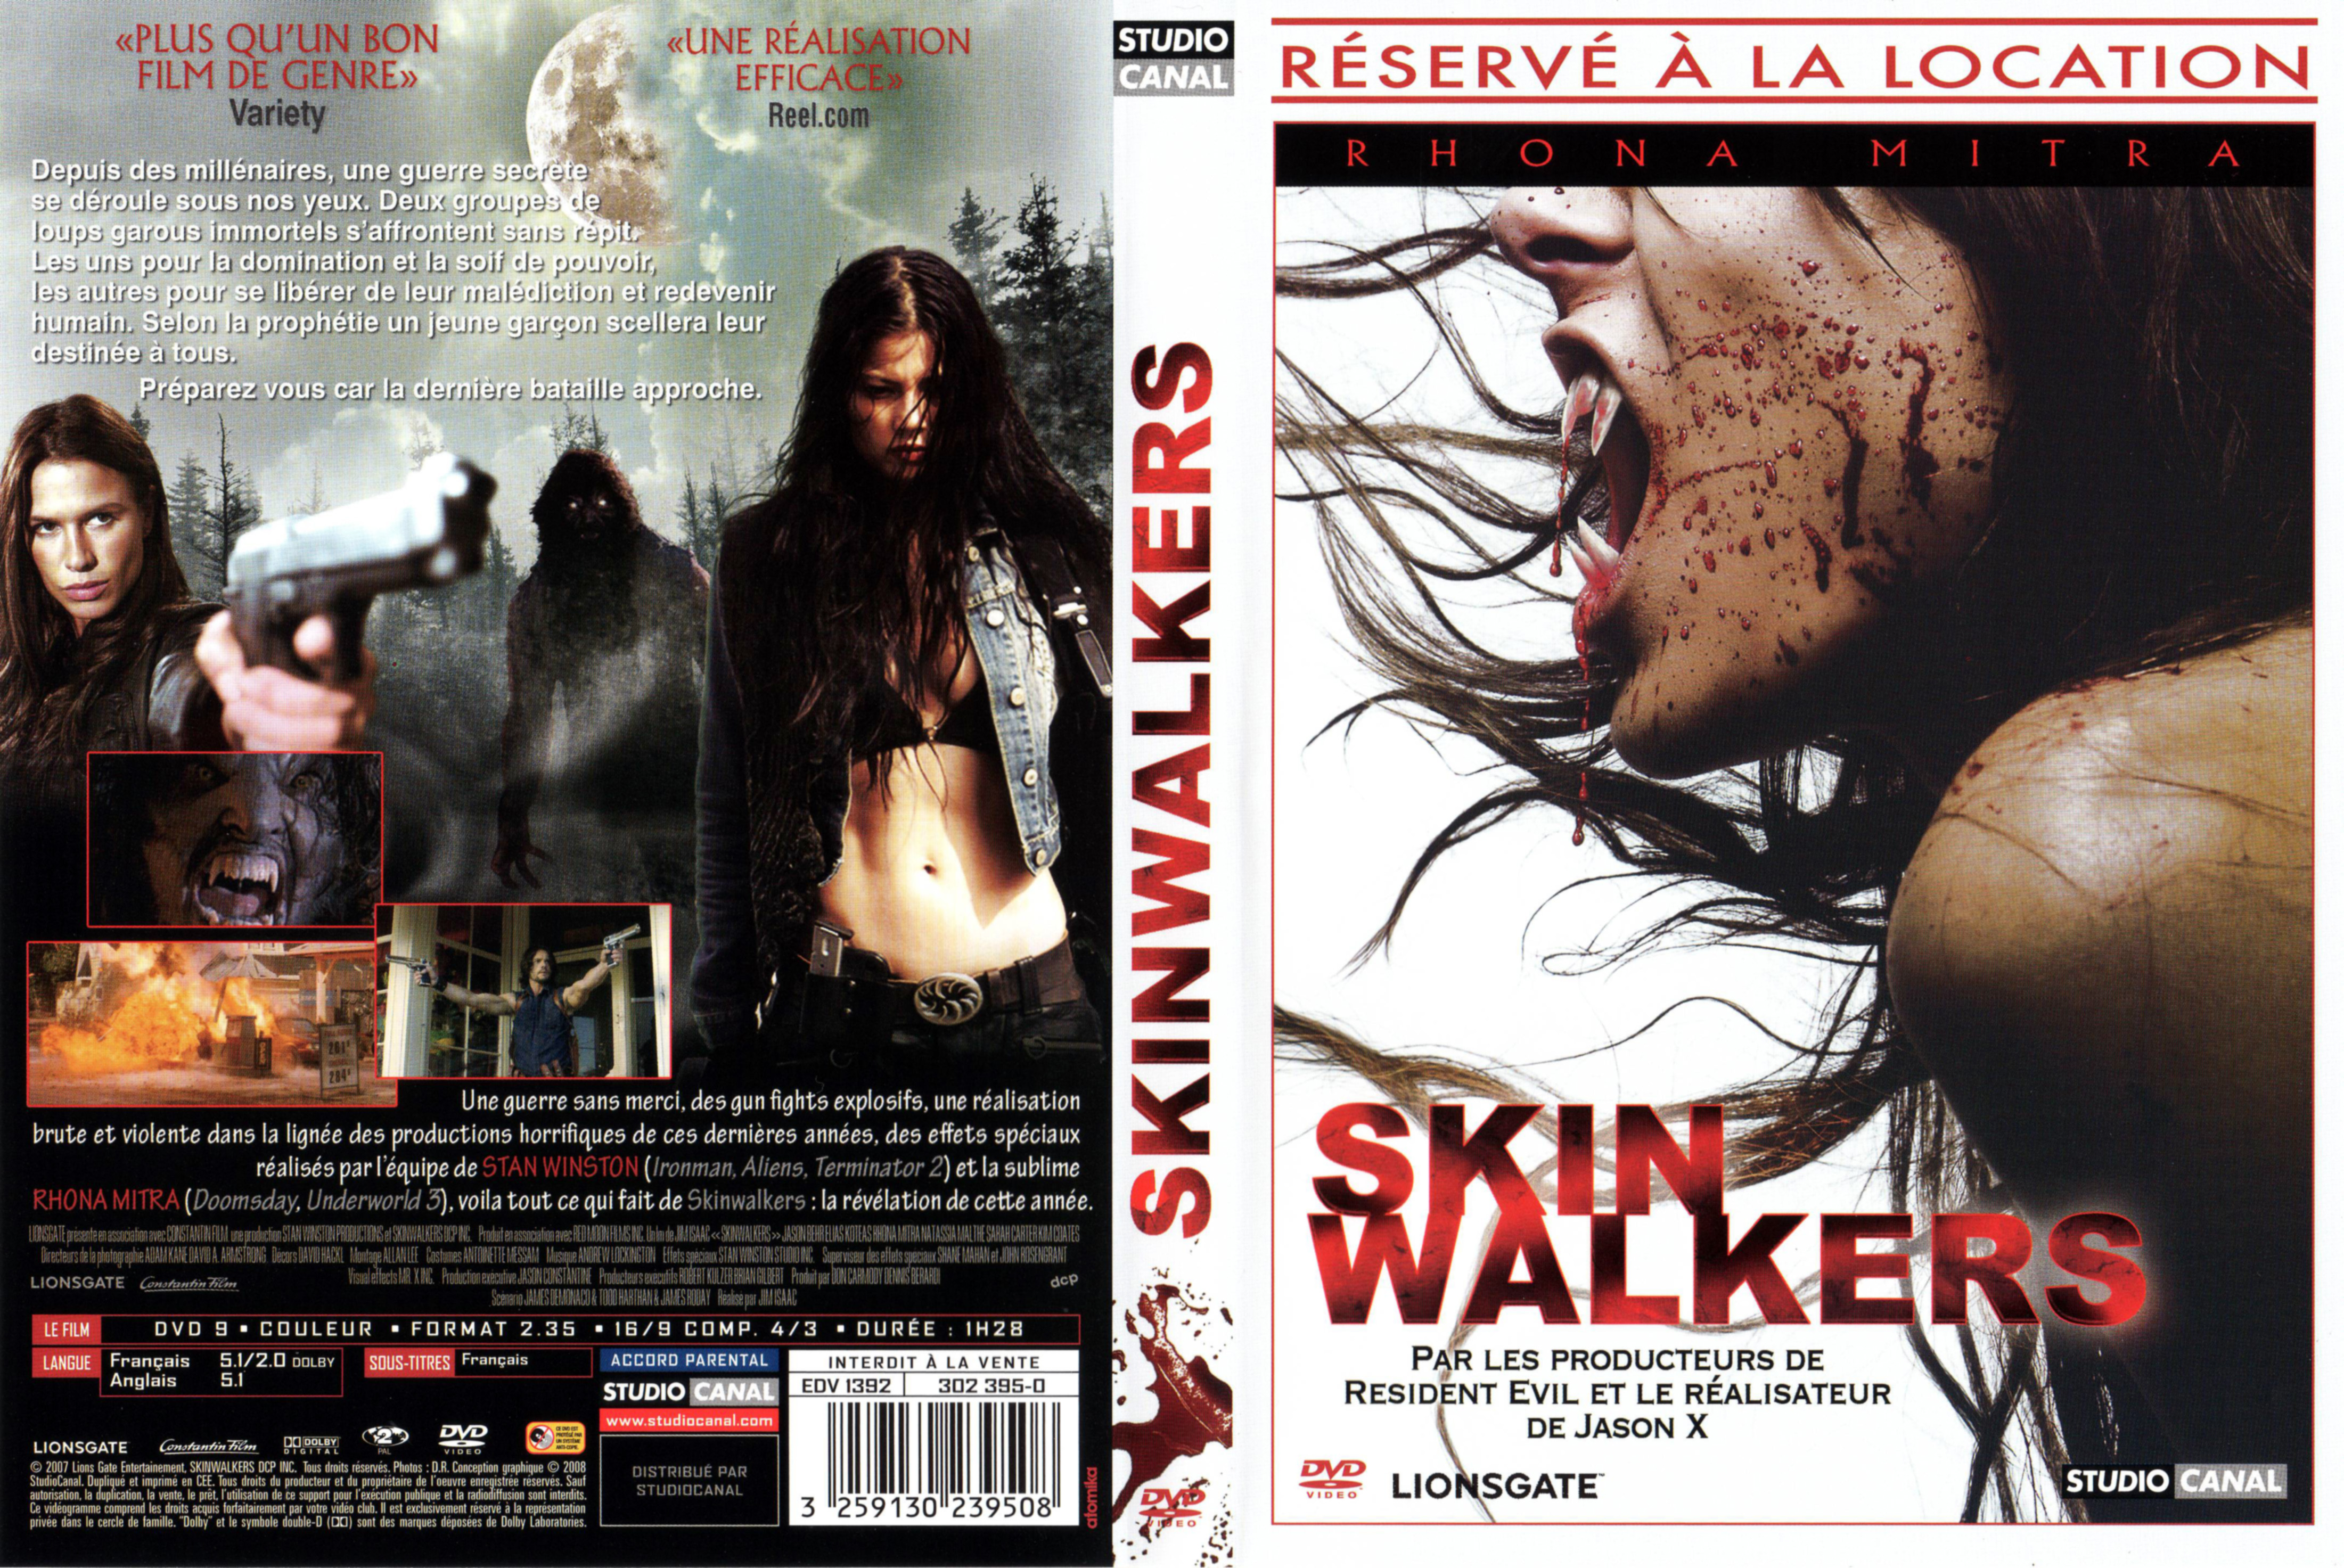 Jaquette DVD Skin walkers